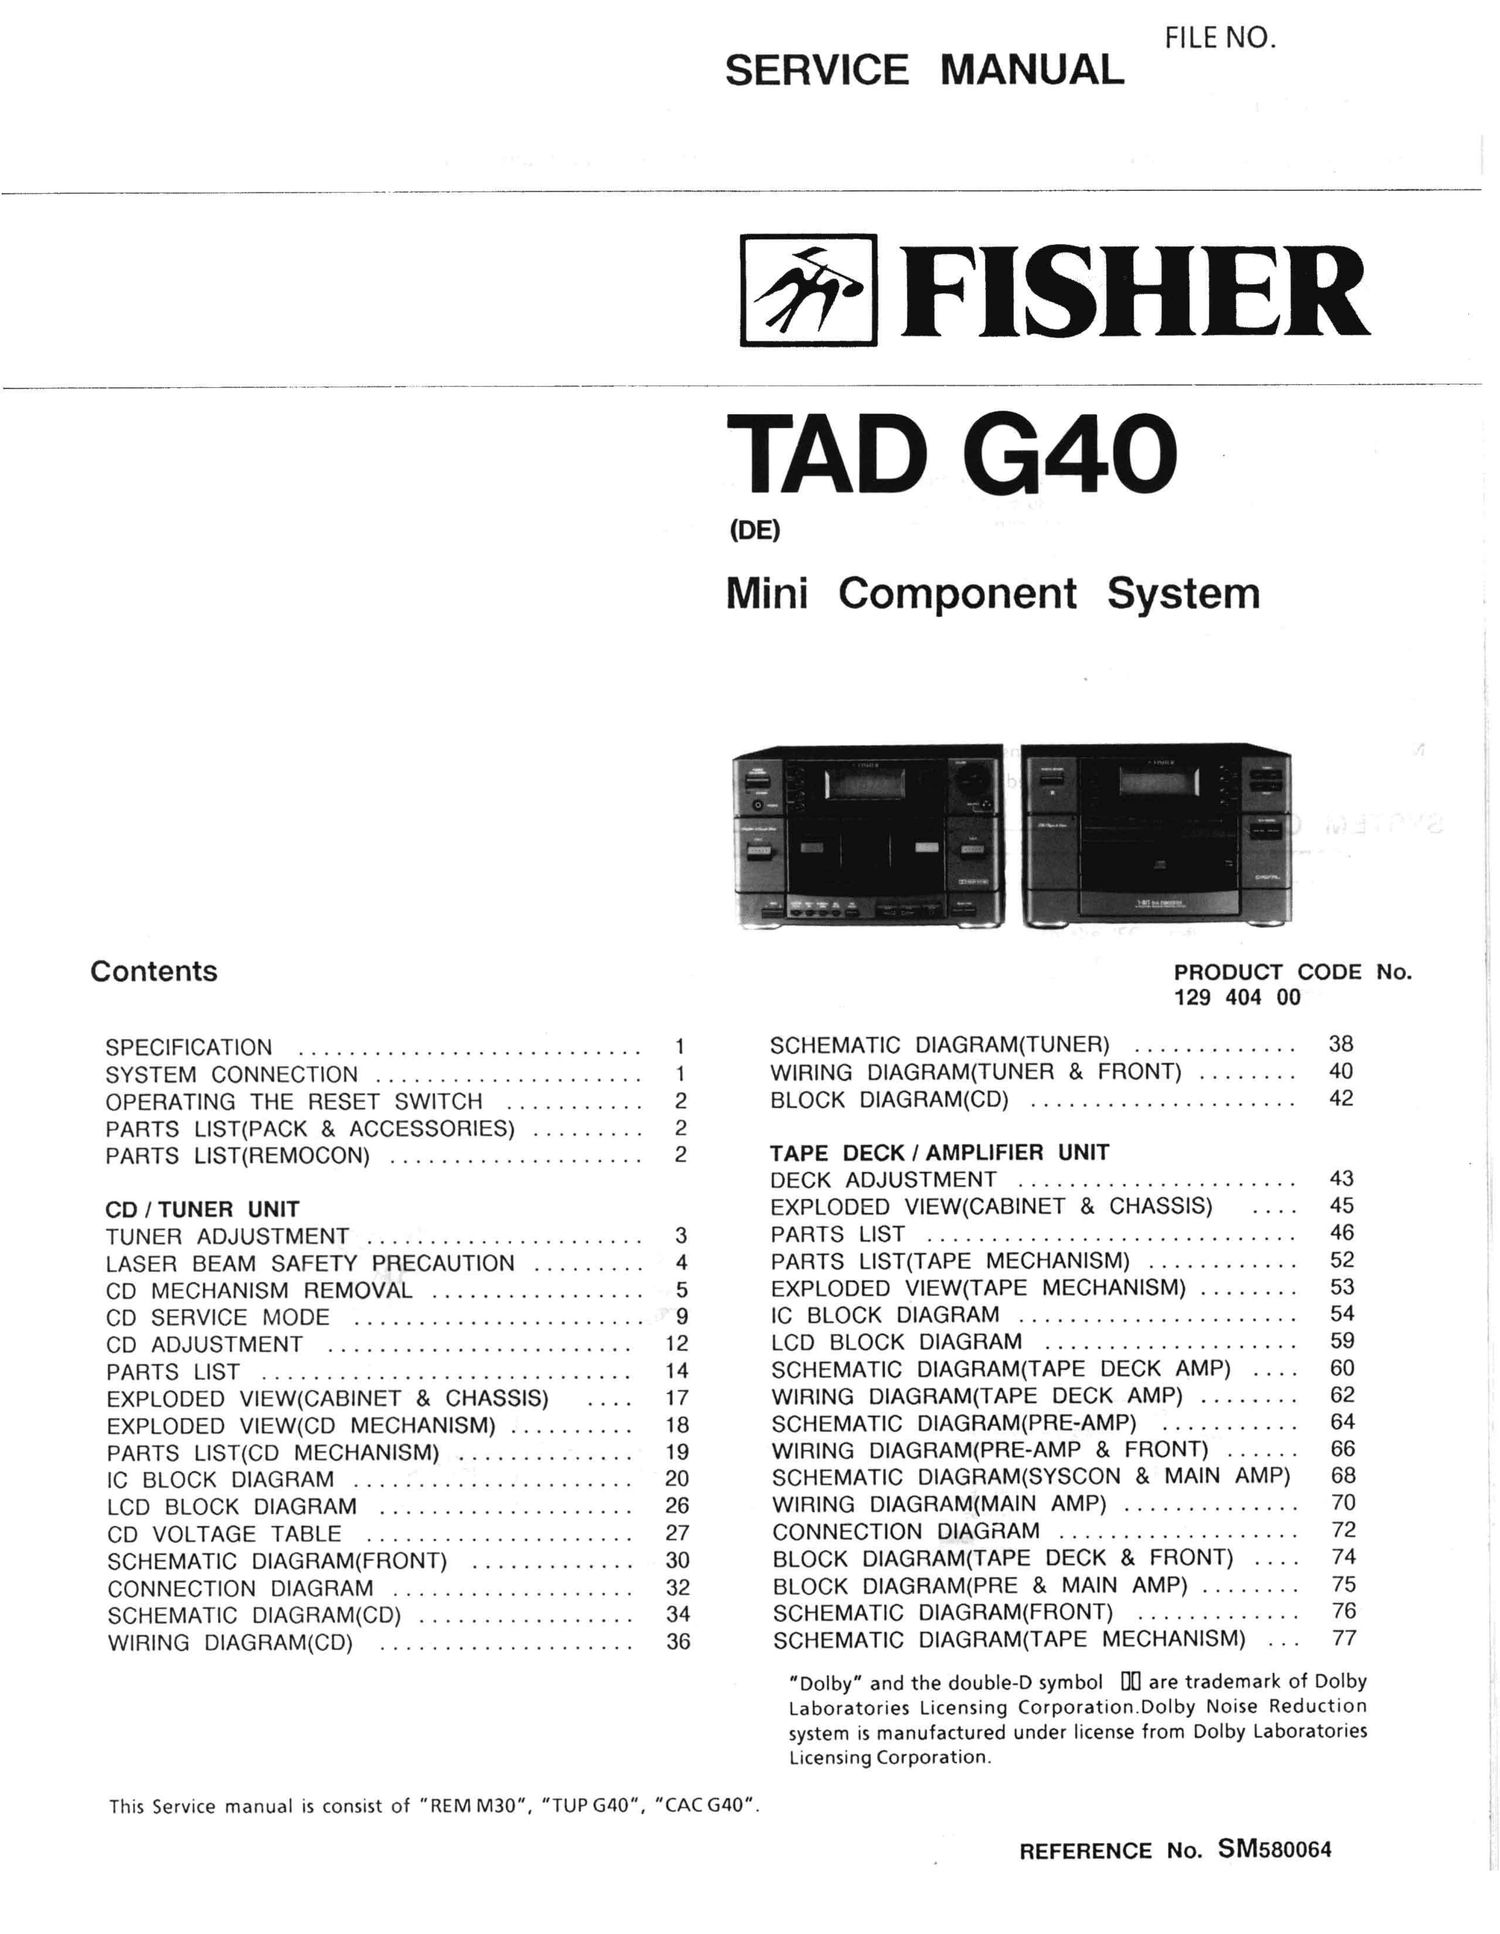 Fisher TAD G40 Schematic